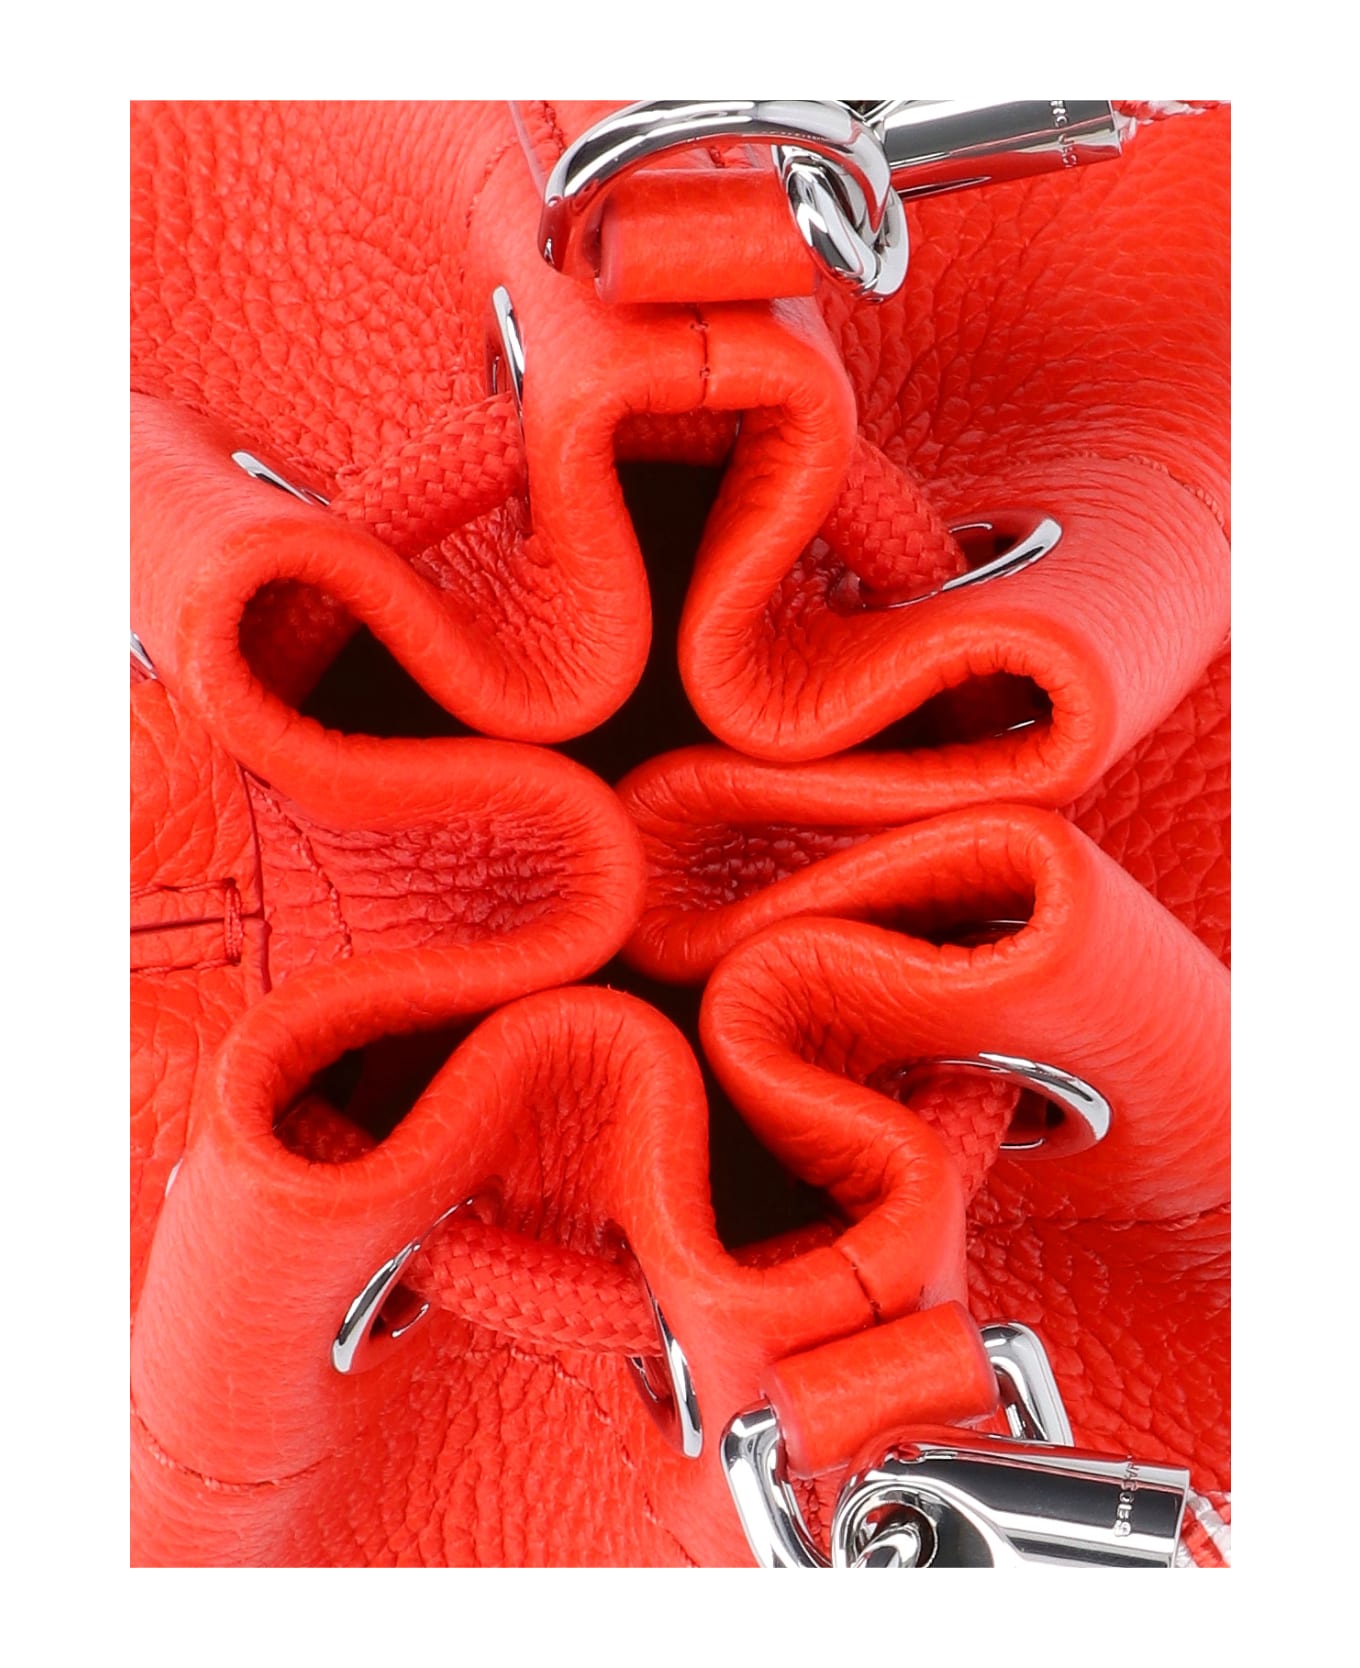 Marc Jacobs Orange Leather The Mini Bucket Bag - Orange トートバッグ